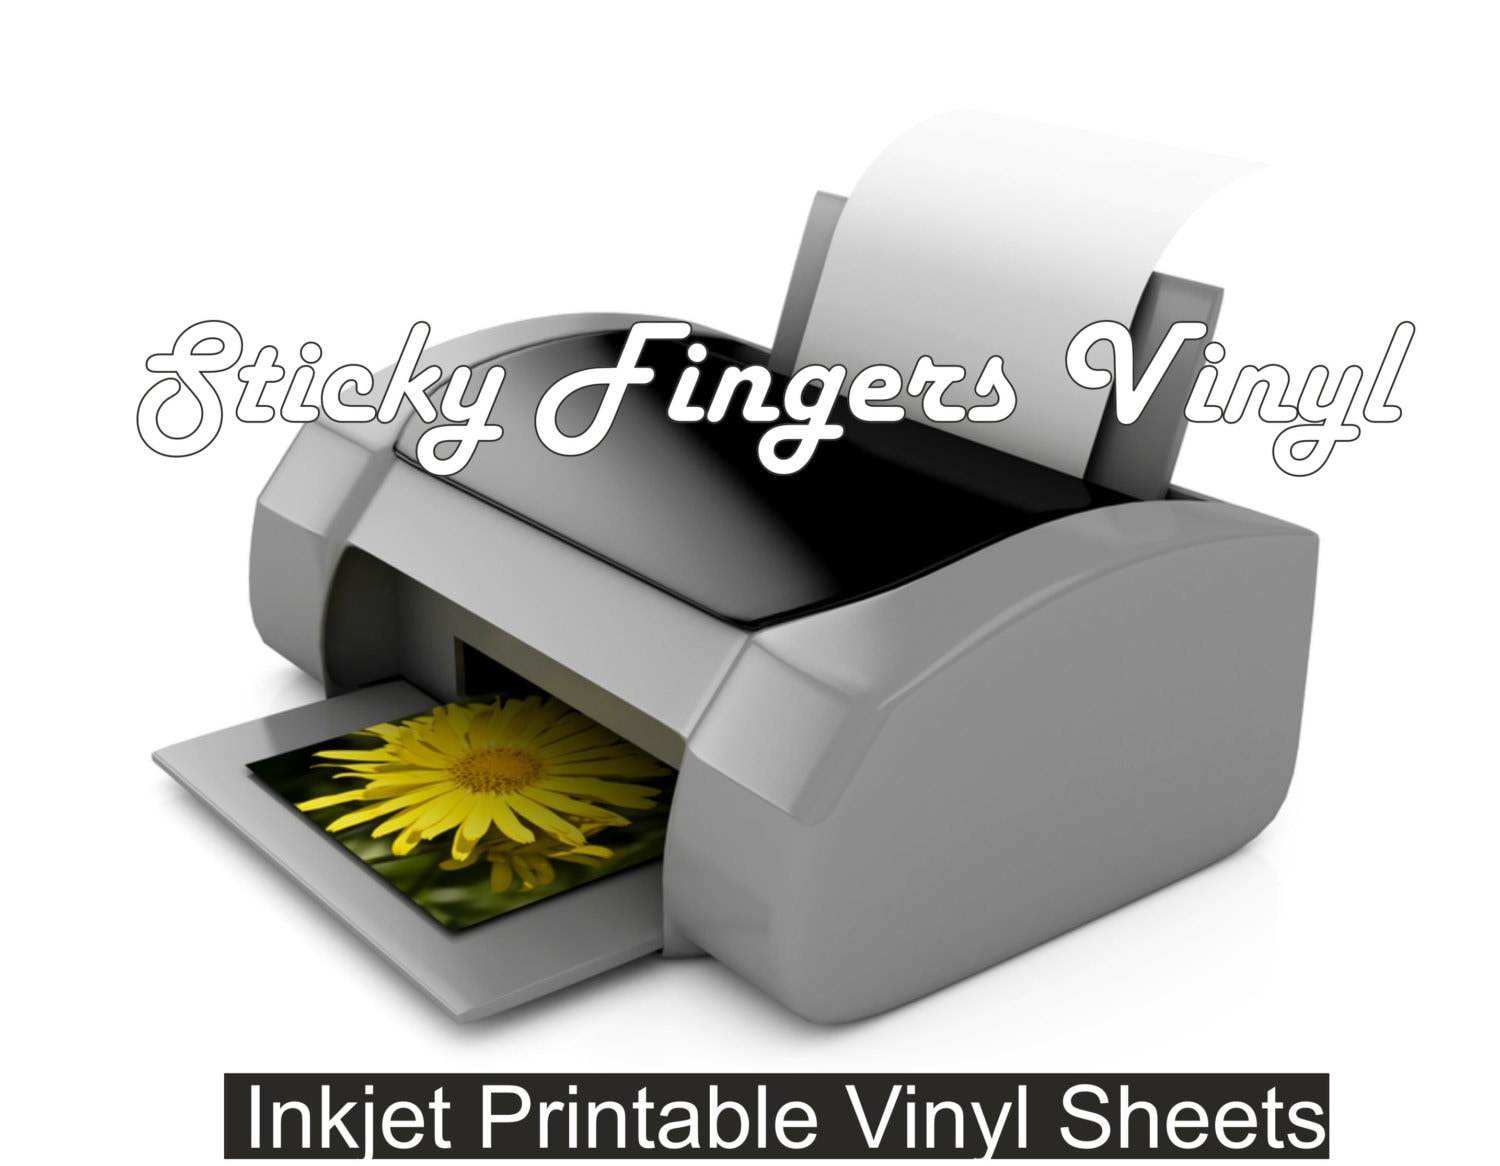 Inkjet PRINTABLE Vinyl Sheets 8.5 x 11